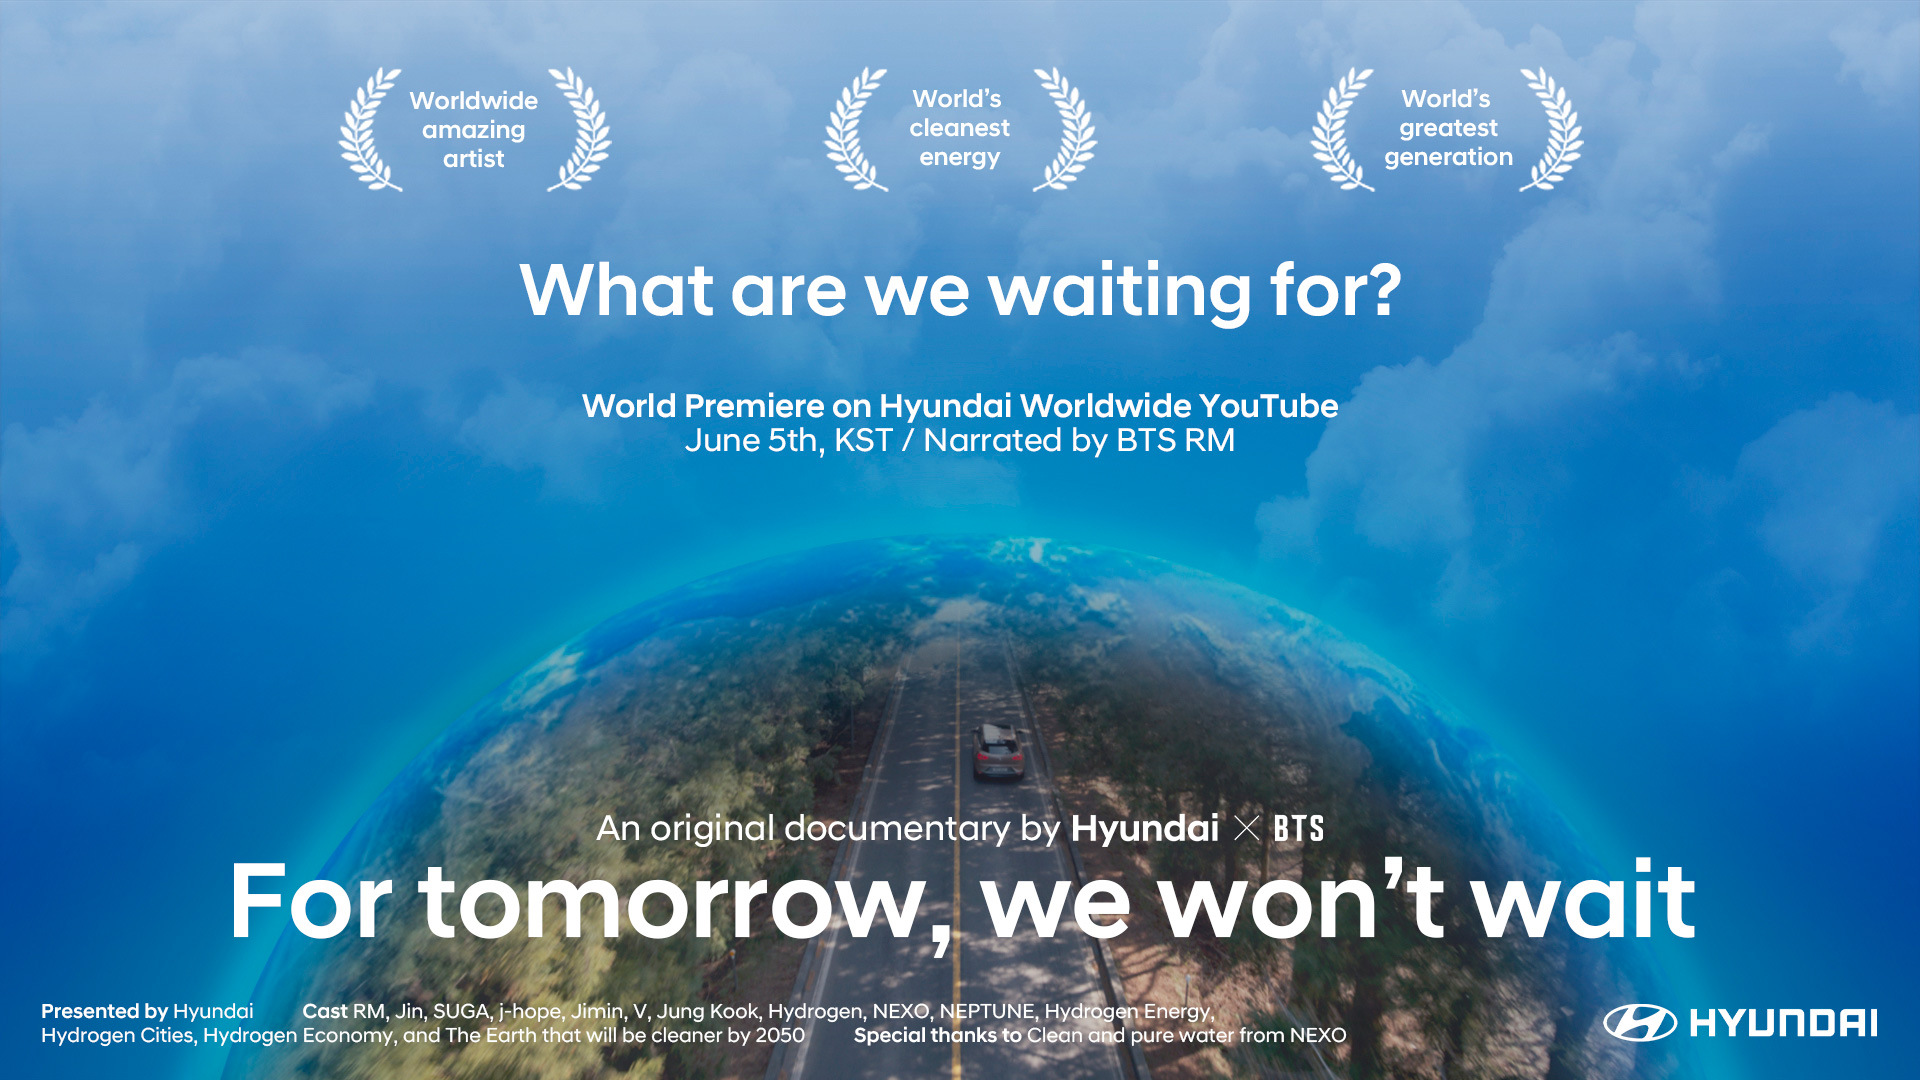 Hyundai Motor Celebrates World Environment Day through Video Highlighting Hydrogen Vision, Featuring